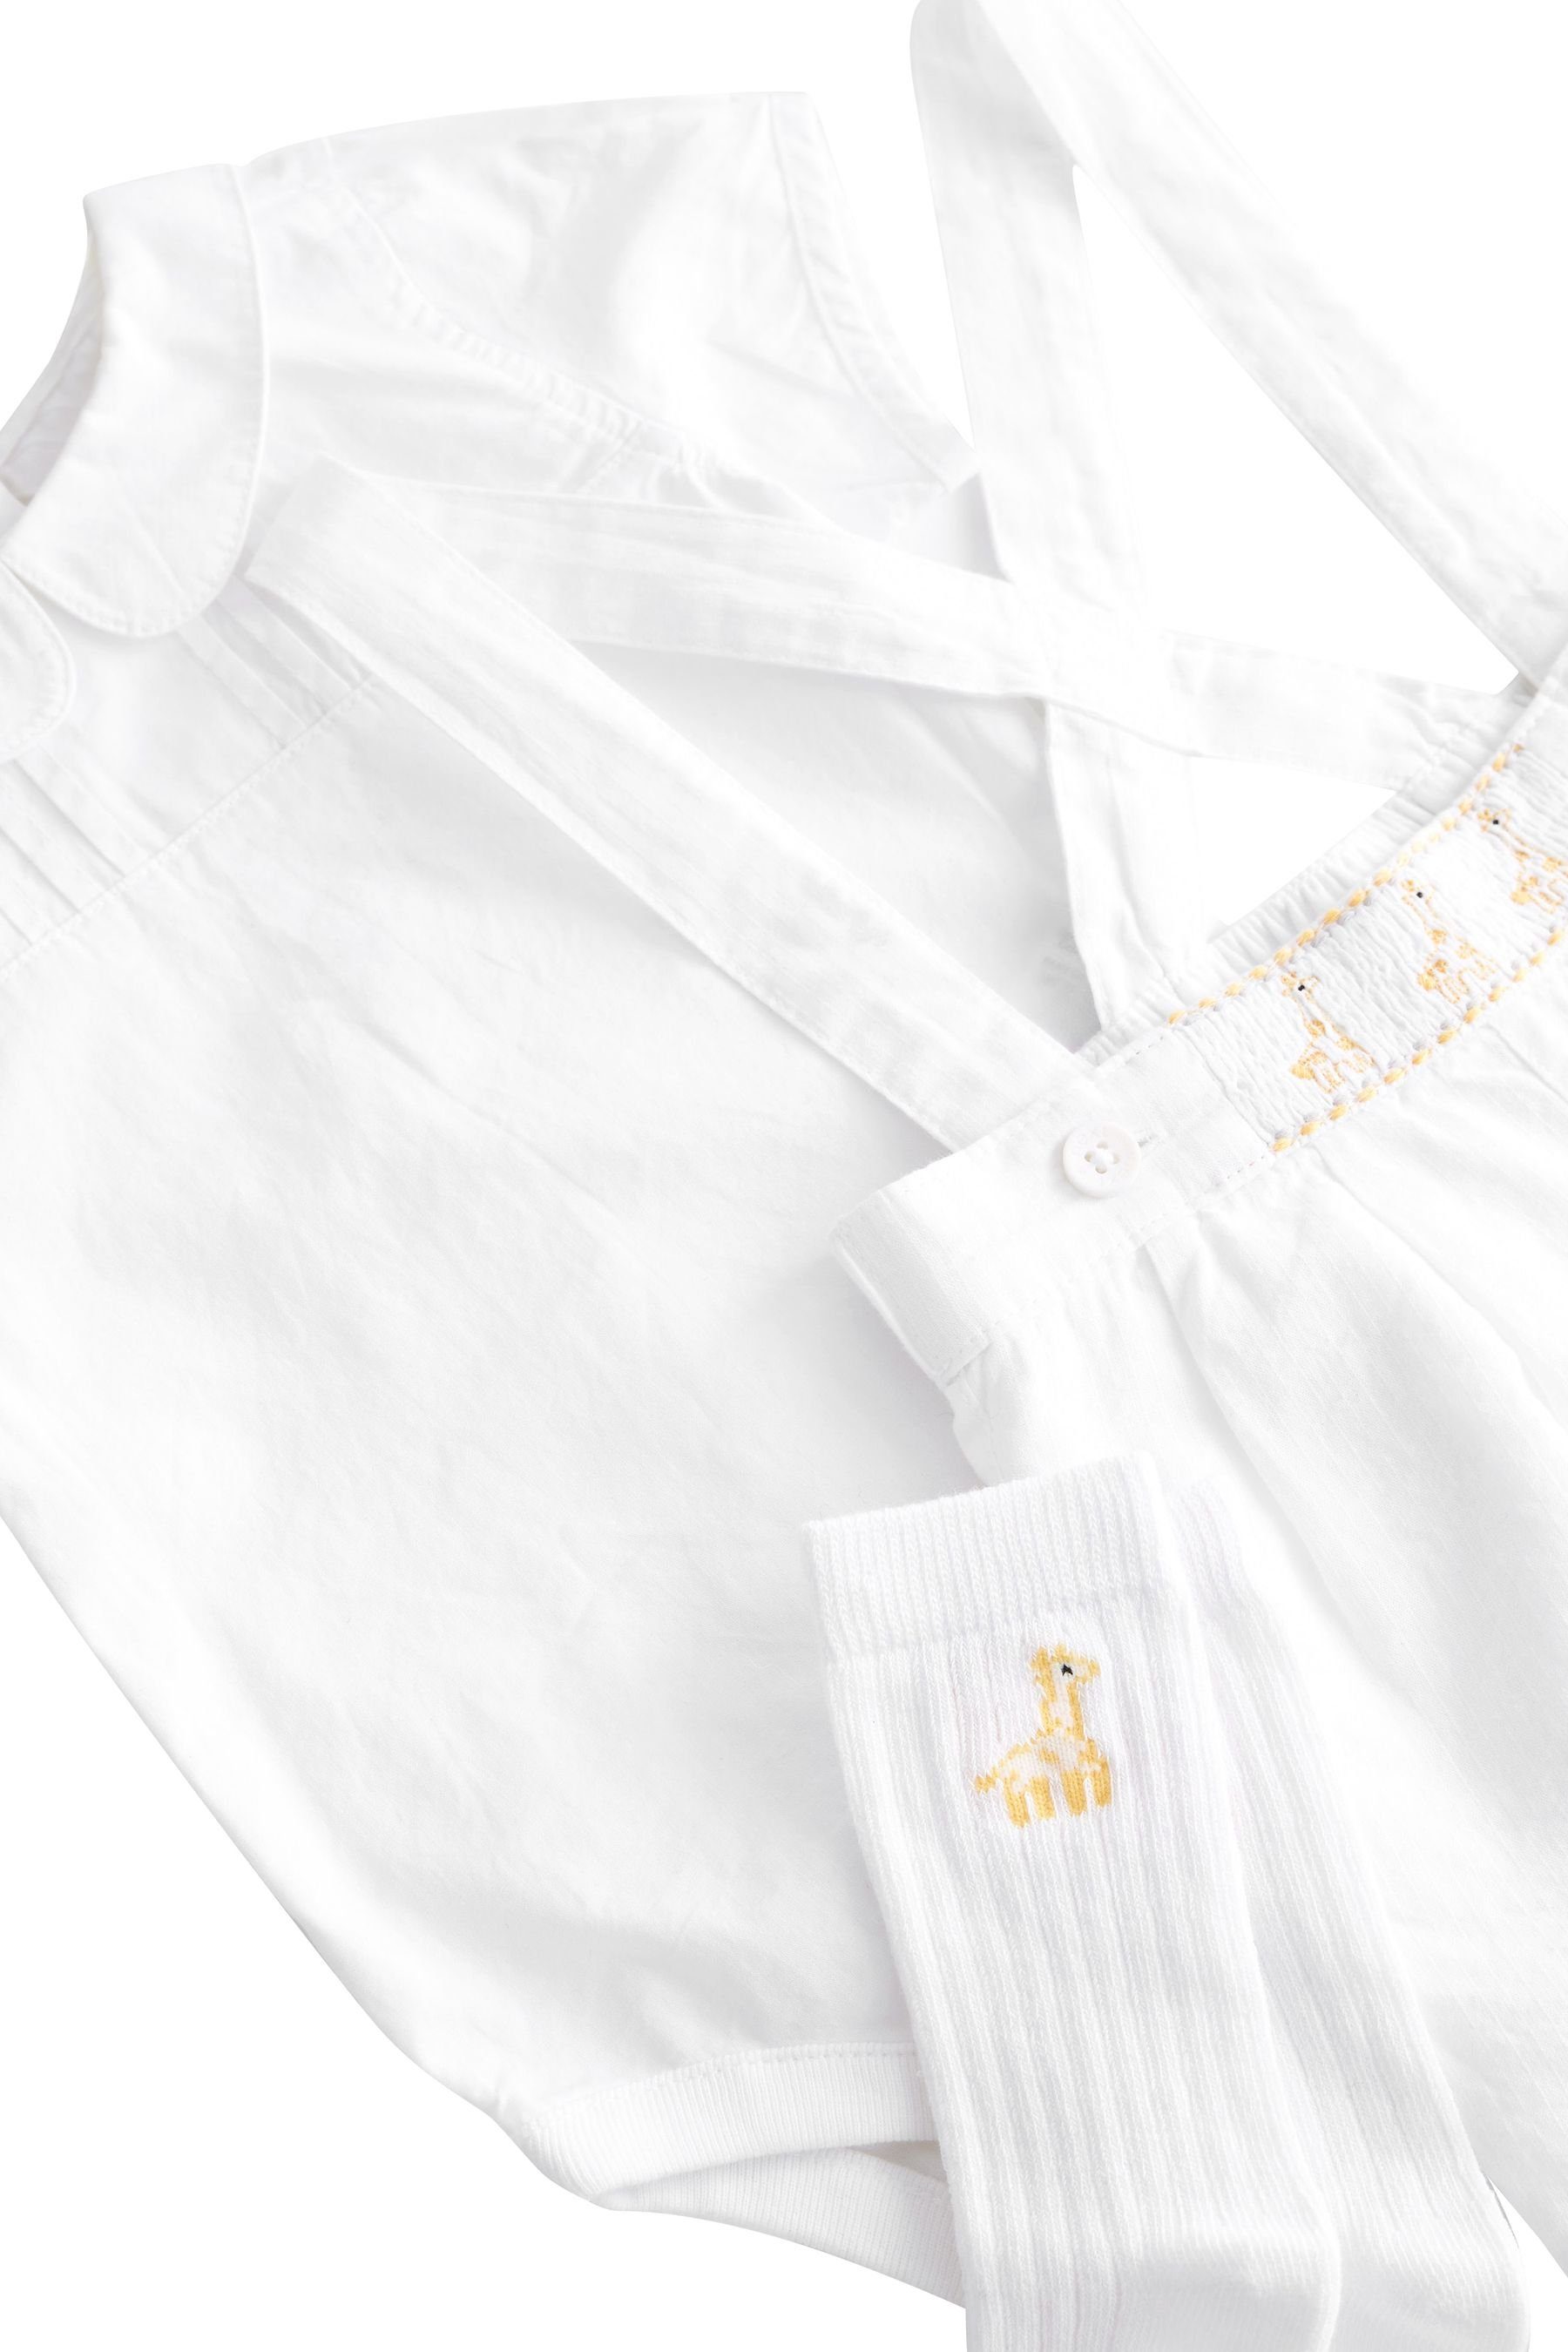 Socken Hose (3-tlg) Hemd Babyset Next und kurzer & Hose mit Hemd, elegantem White